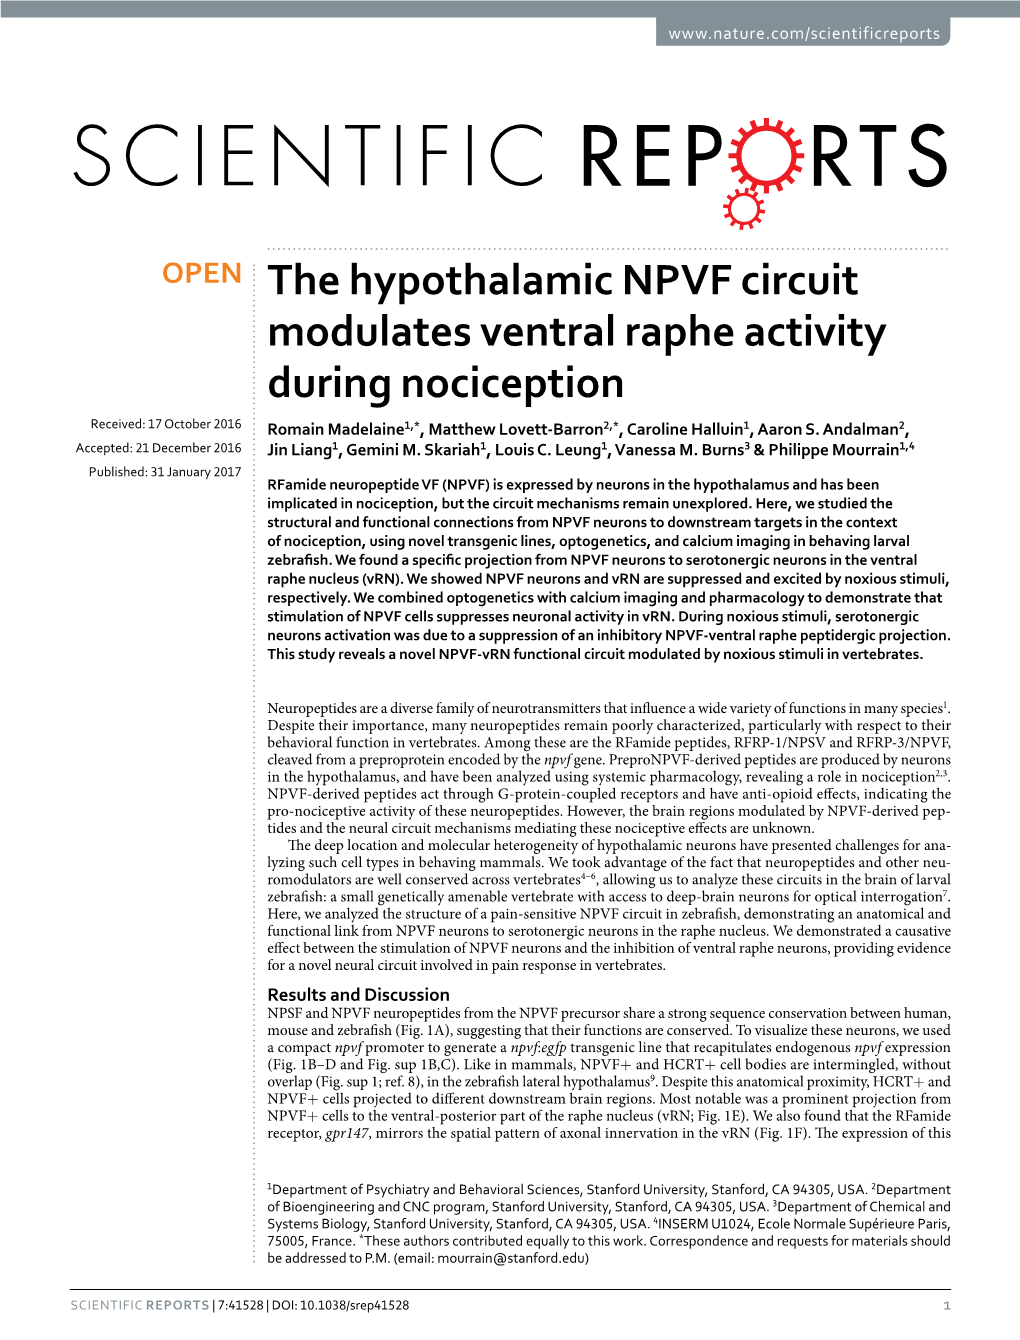 The Hypothalamic NPVF Circuit Modulates Ventral Raphe Activity